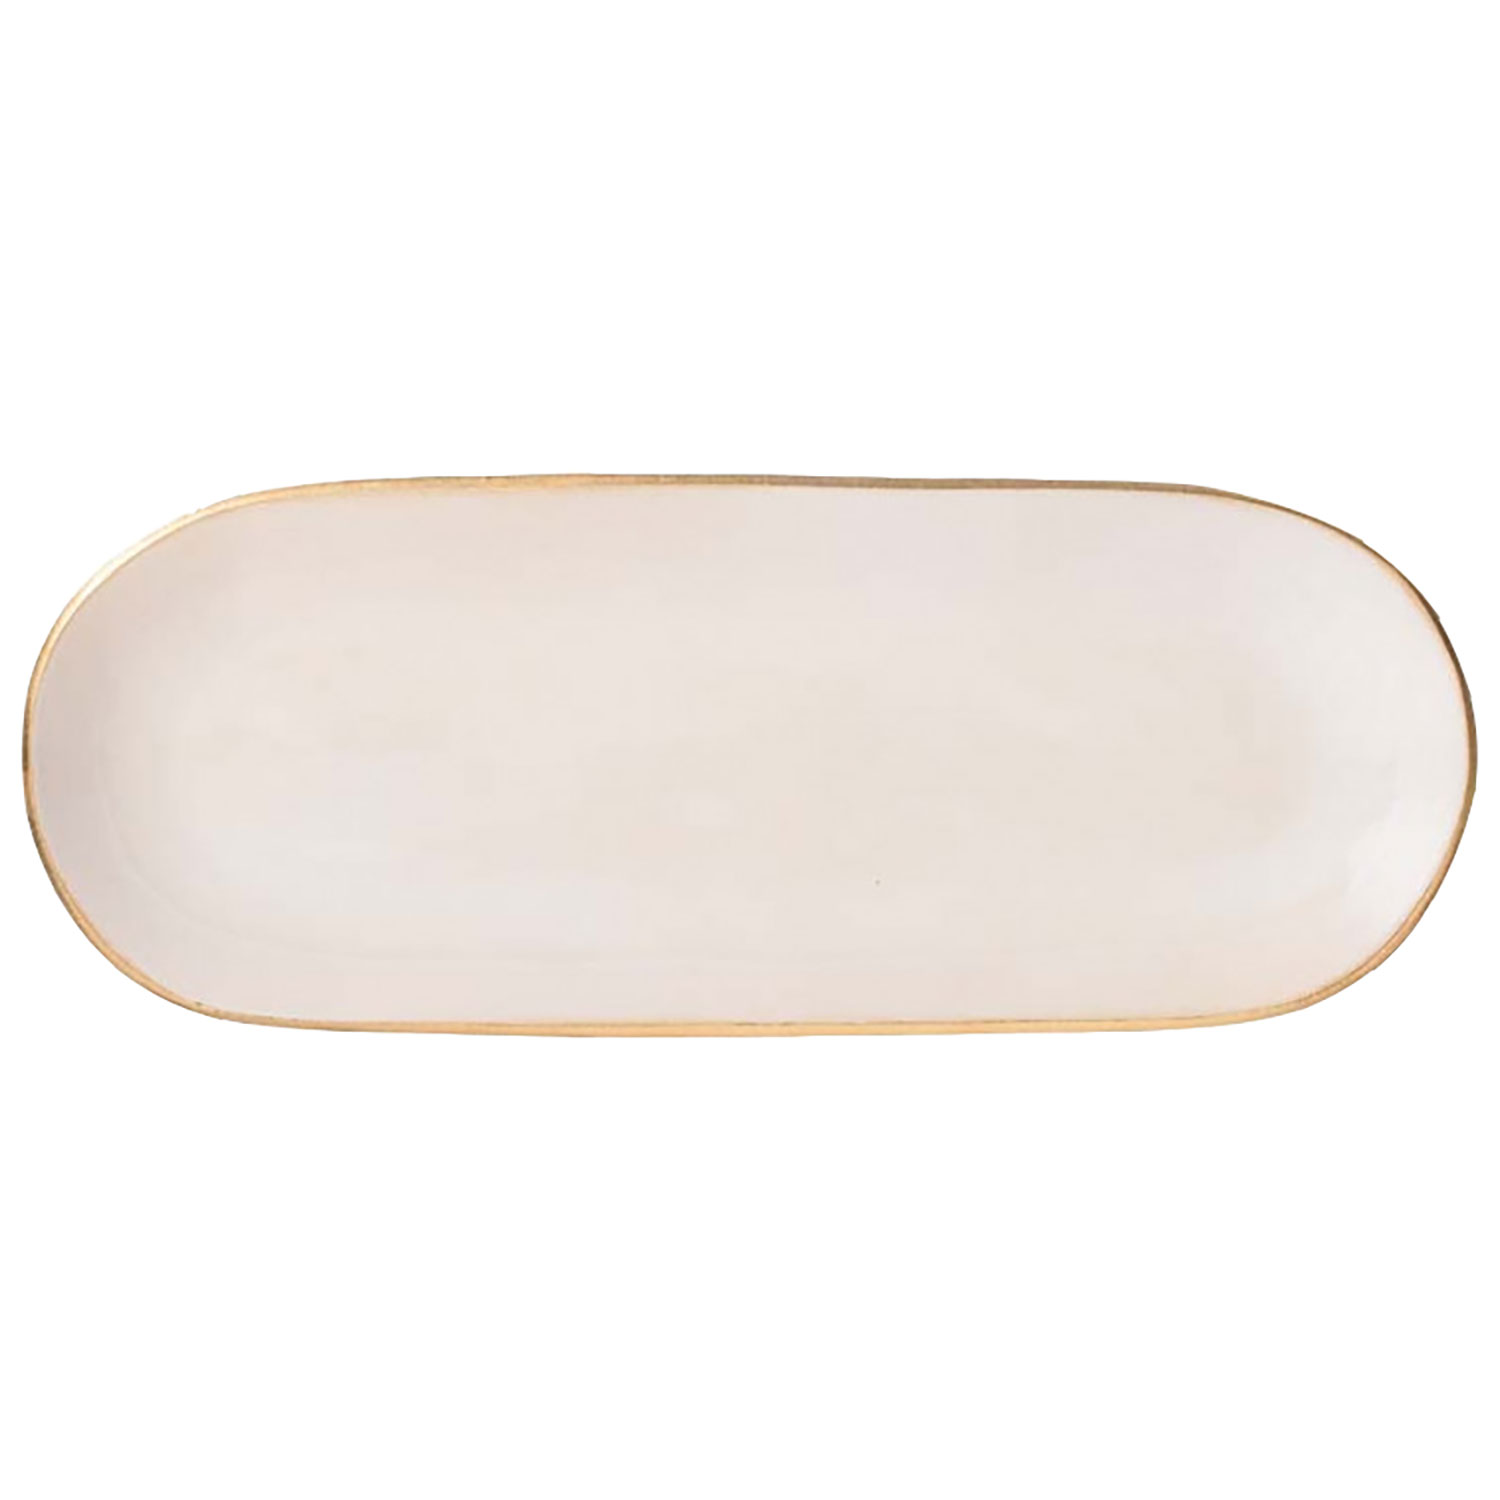 https://api-prod.royaldesign.se/api/products/image/2/heirol-nosse-ceramics-edge-serving-dish-ivory-gold-30-cm-0